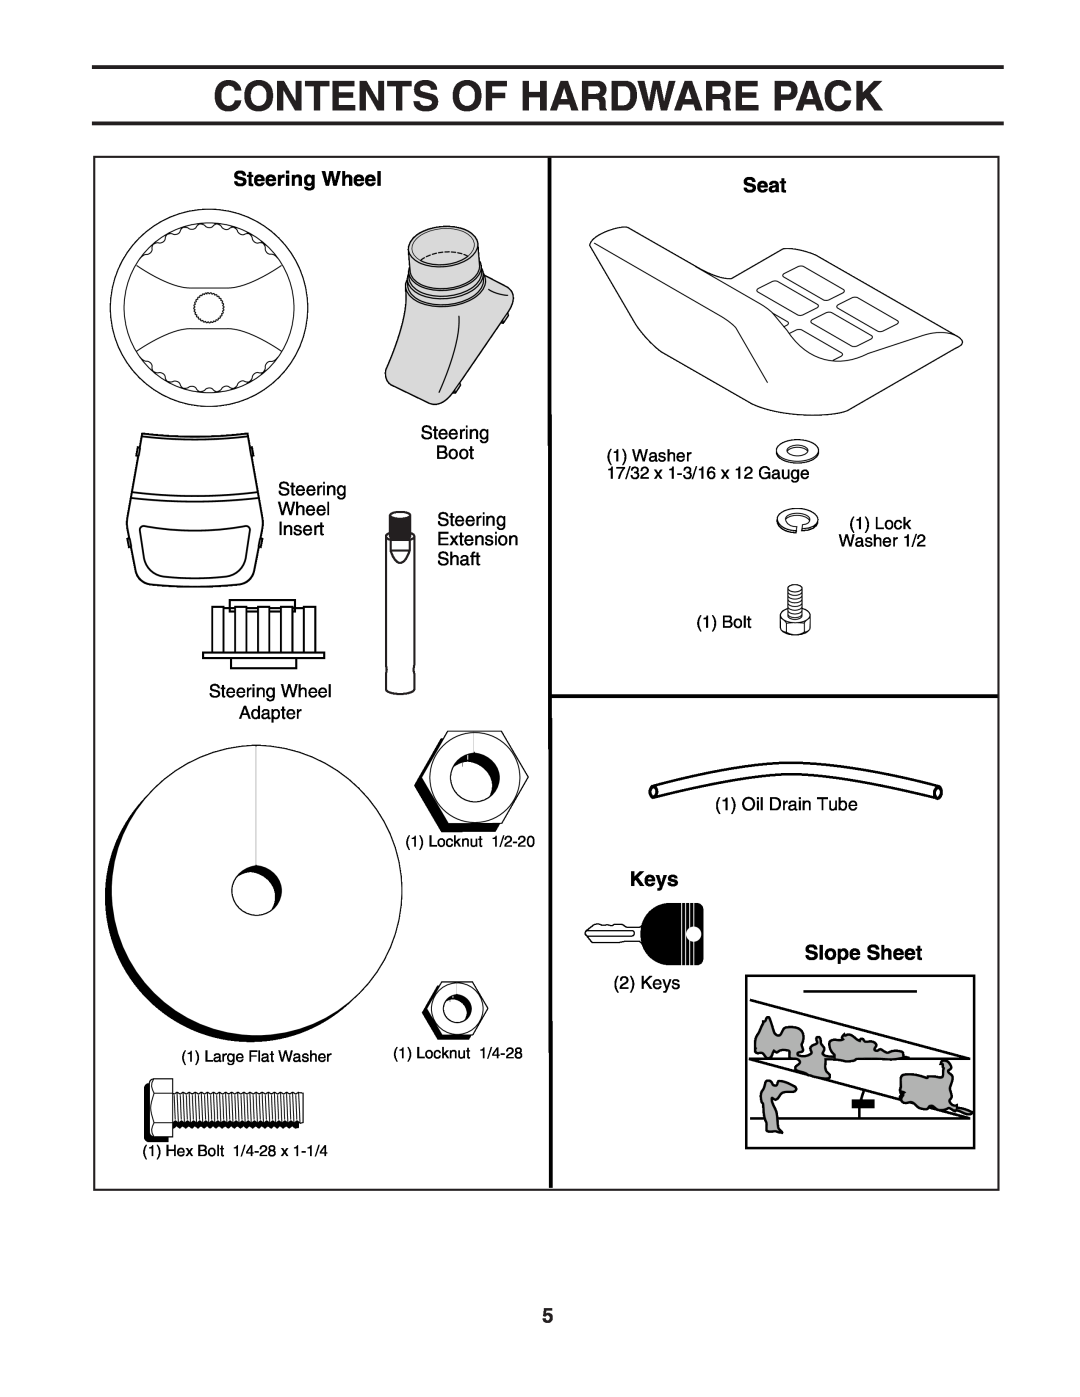 Poulan PO1742STC manual Contents Of Hardware Pack, Steering Wheel, Seat, Keys, Slope Sheet 